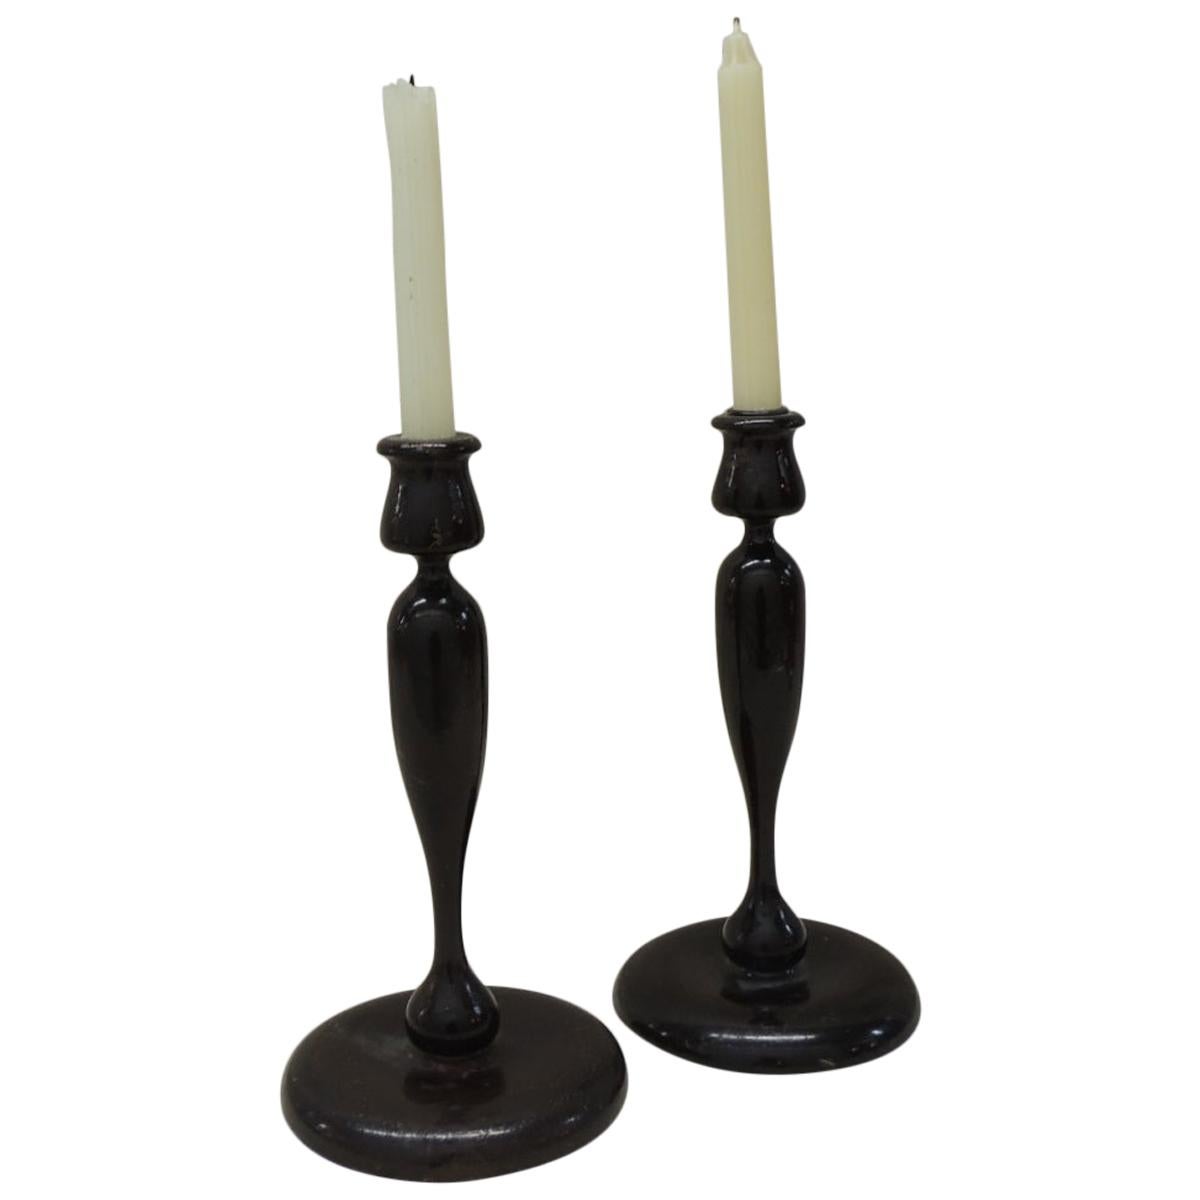 Pair of Vintage Turned Wood Candleholders